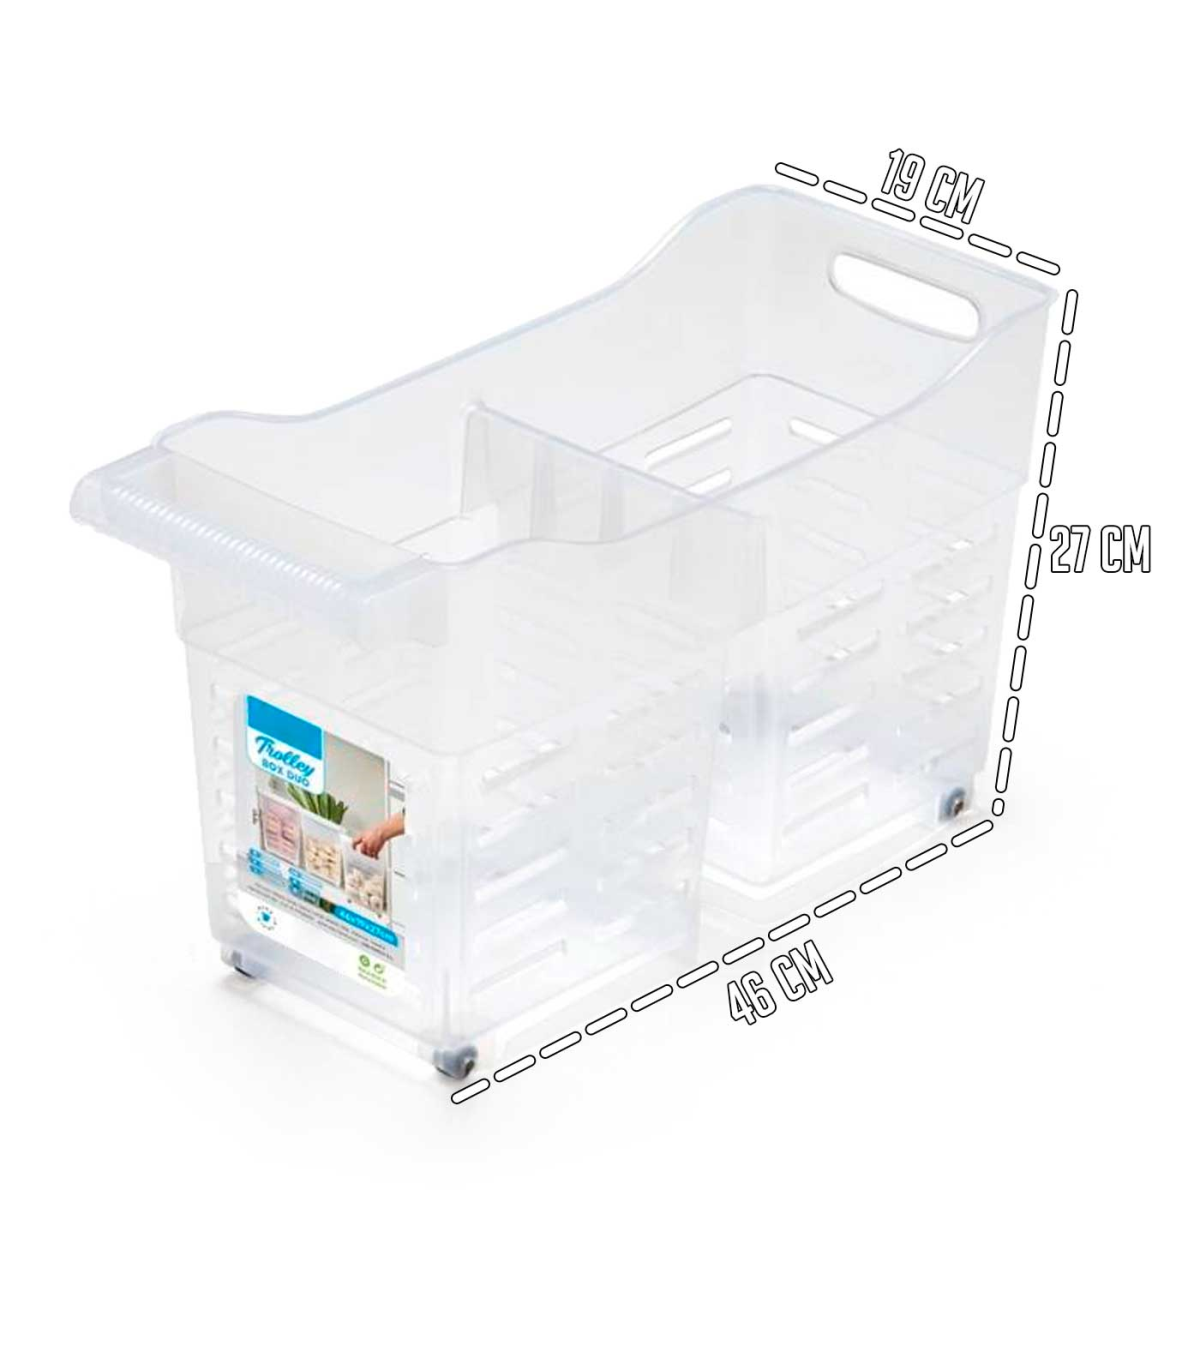 Tradineur - Carrito multiusos de plástico con ruedas y asa, 2  compartimentos, cesta organizadora para productos de limpieza, bañ